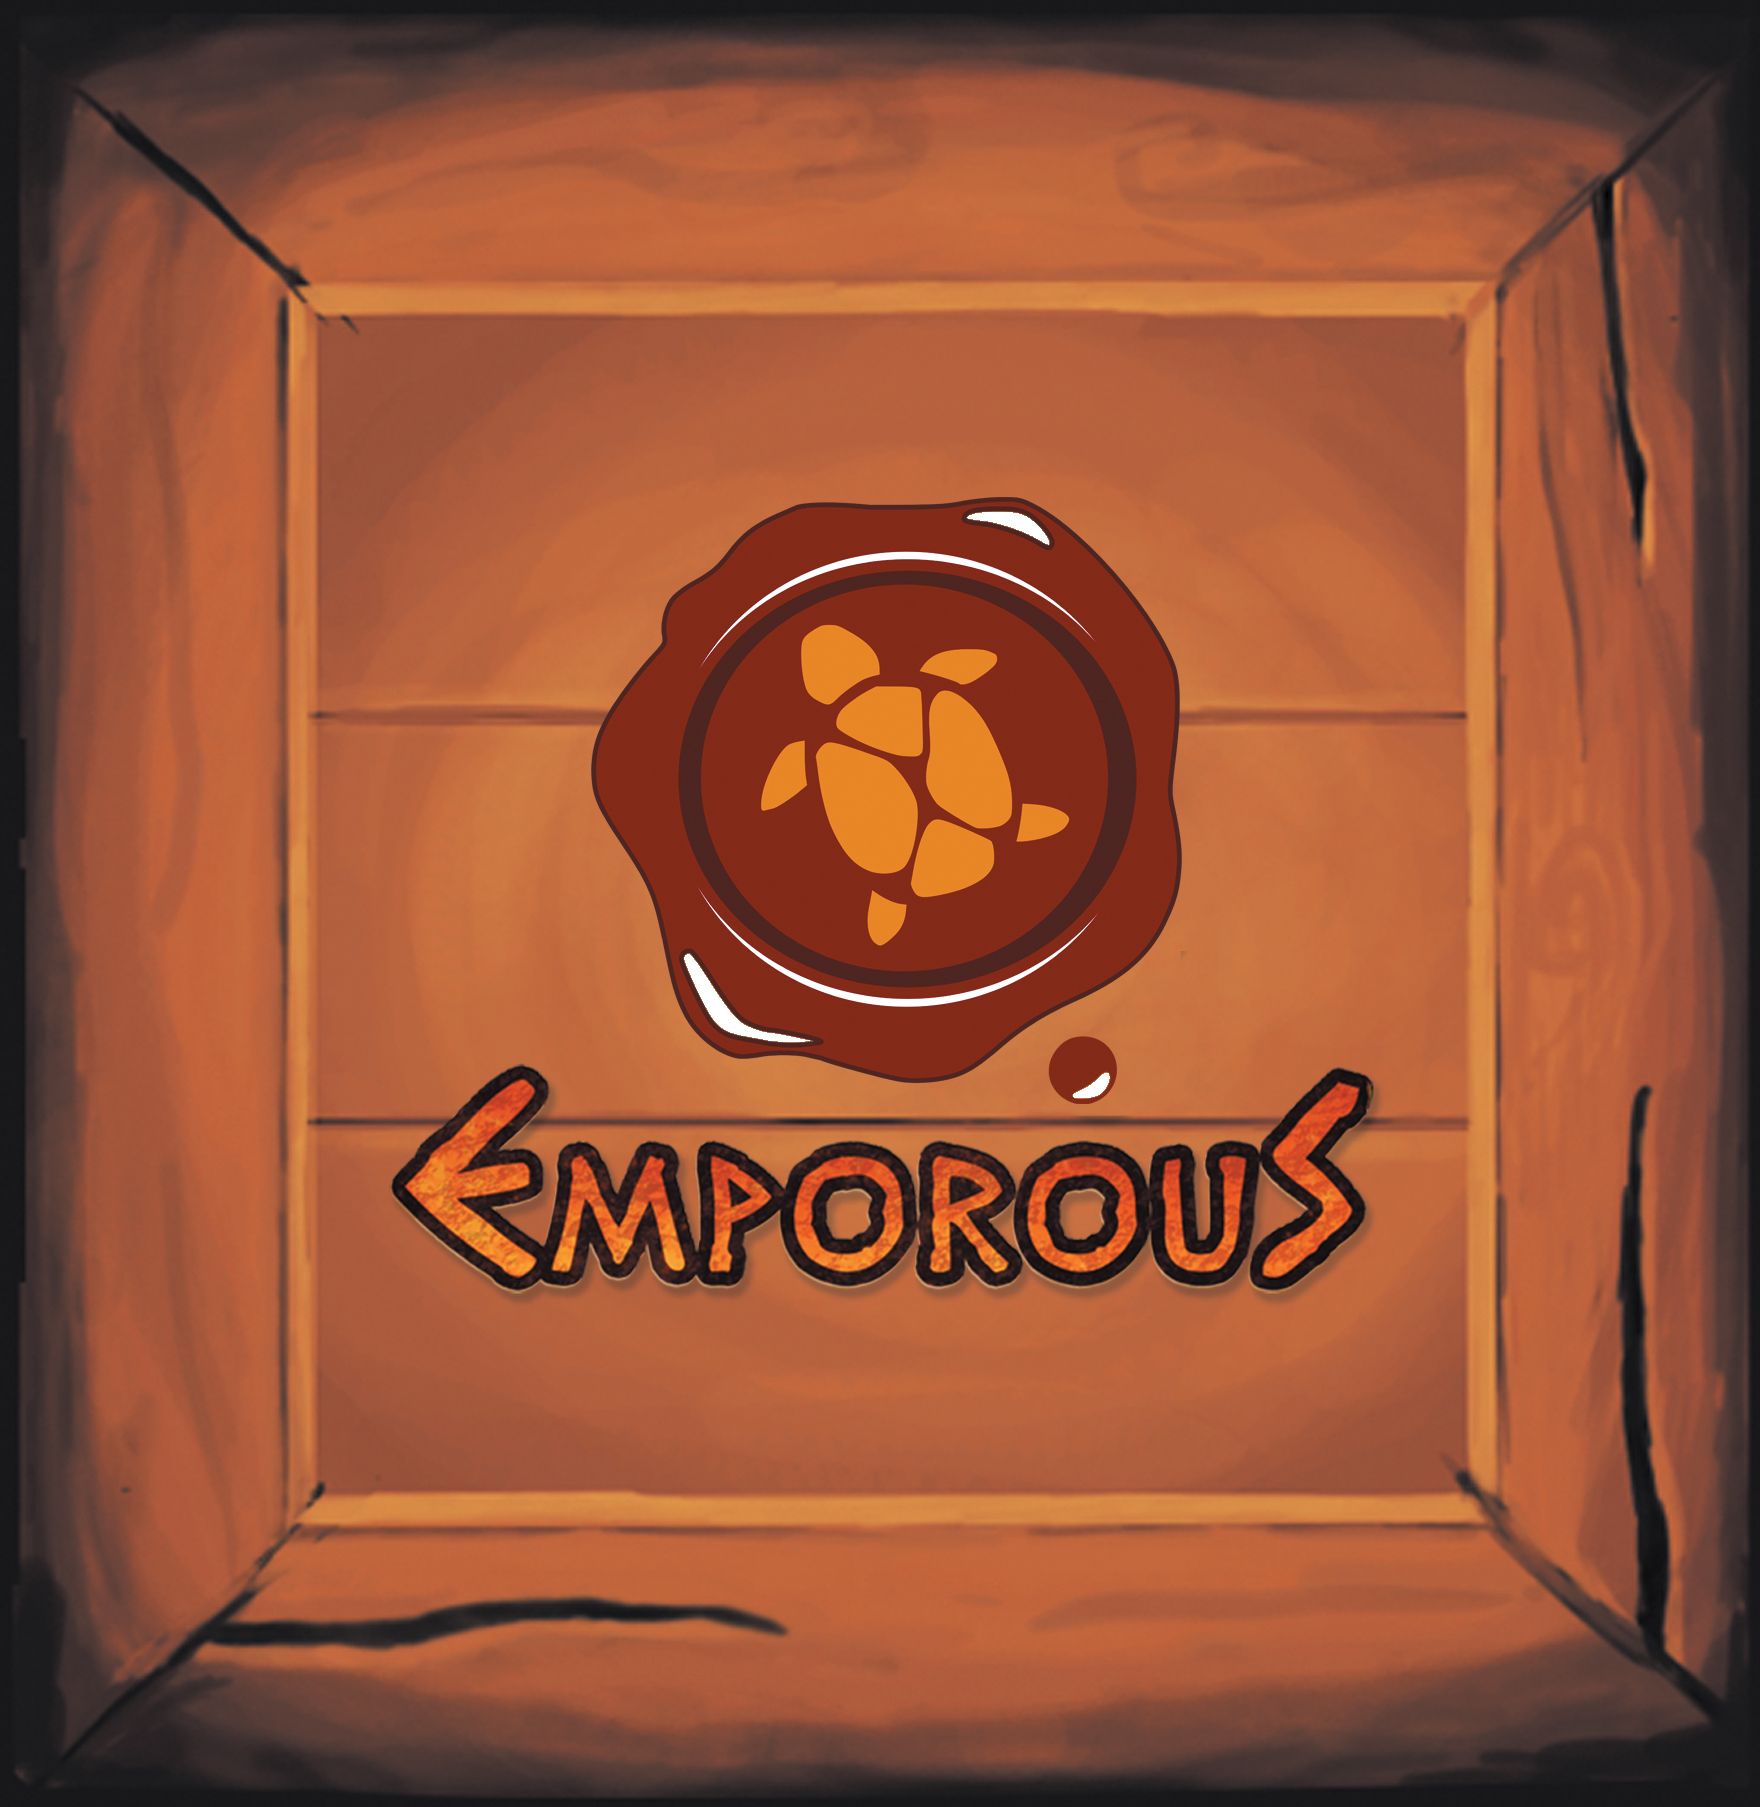 Emporous